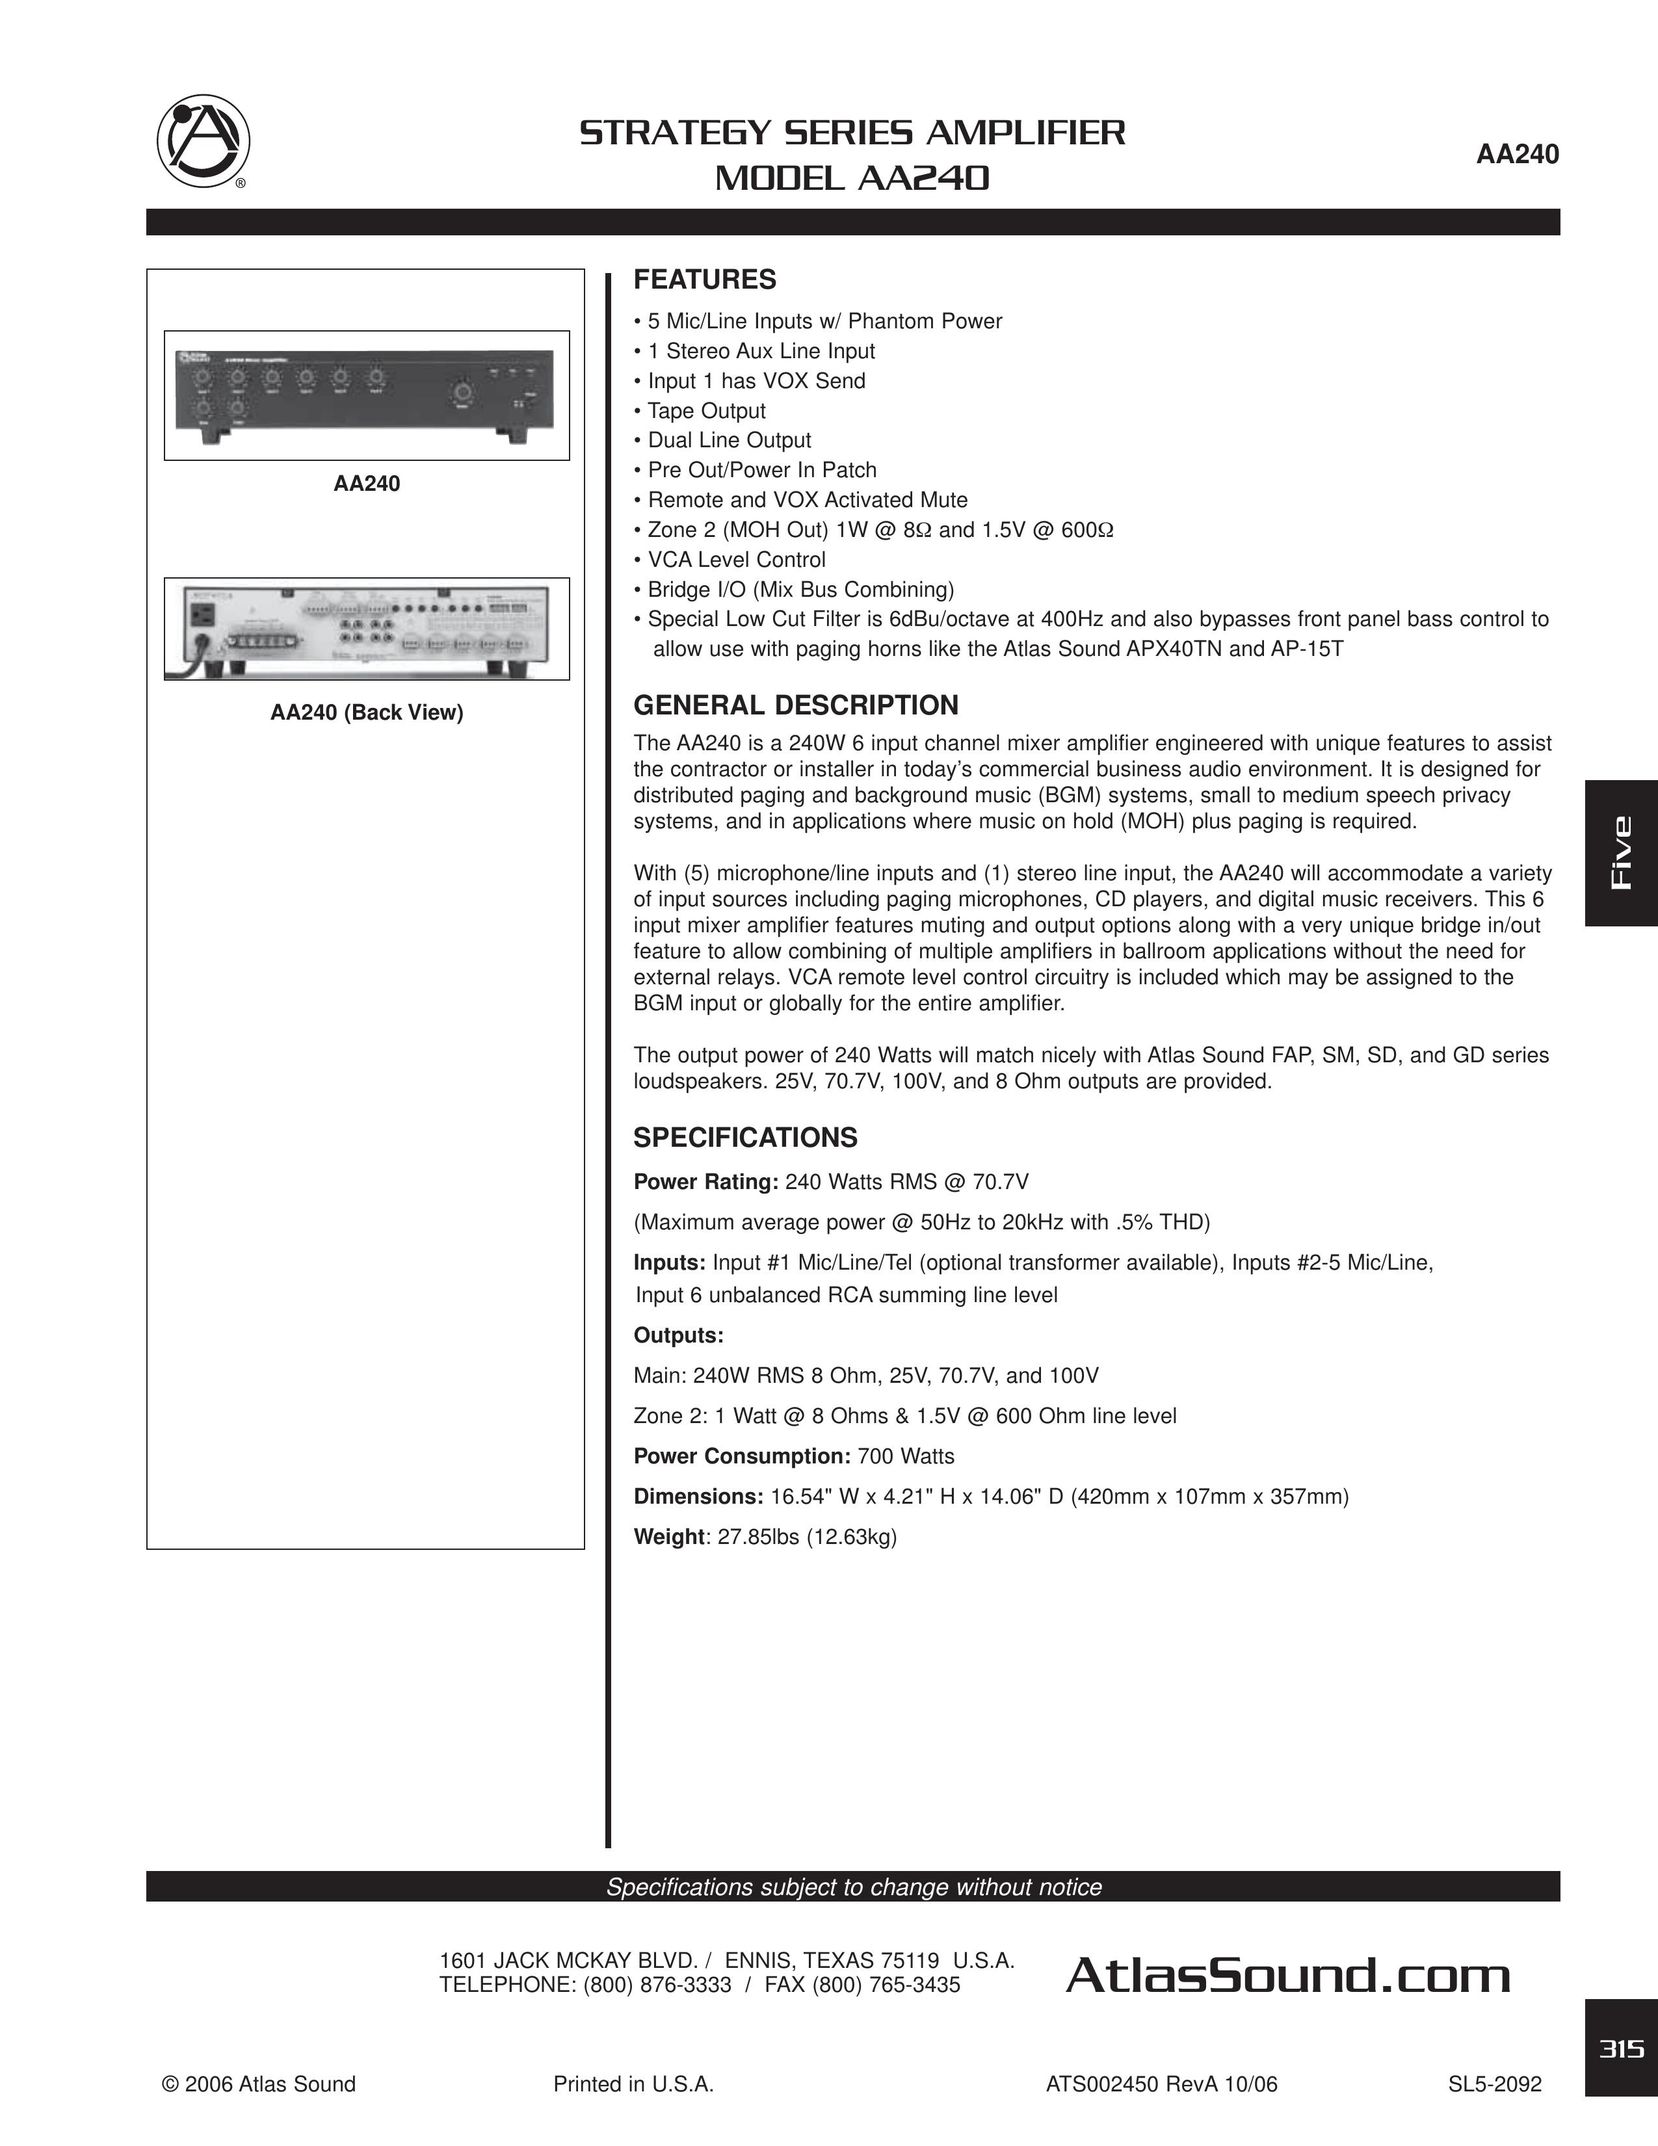 Atlas Sound AA240 Stereo Amplifier User Manual